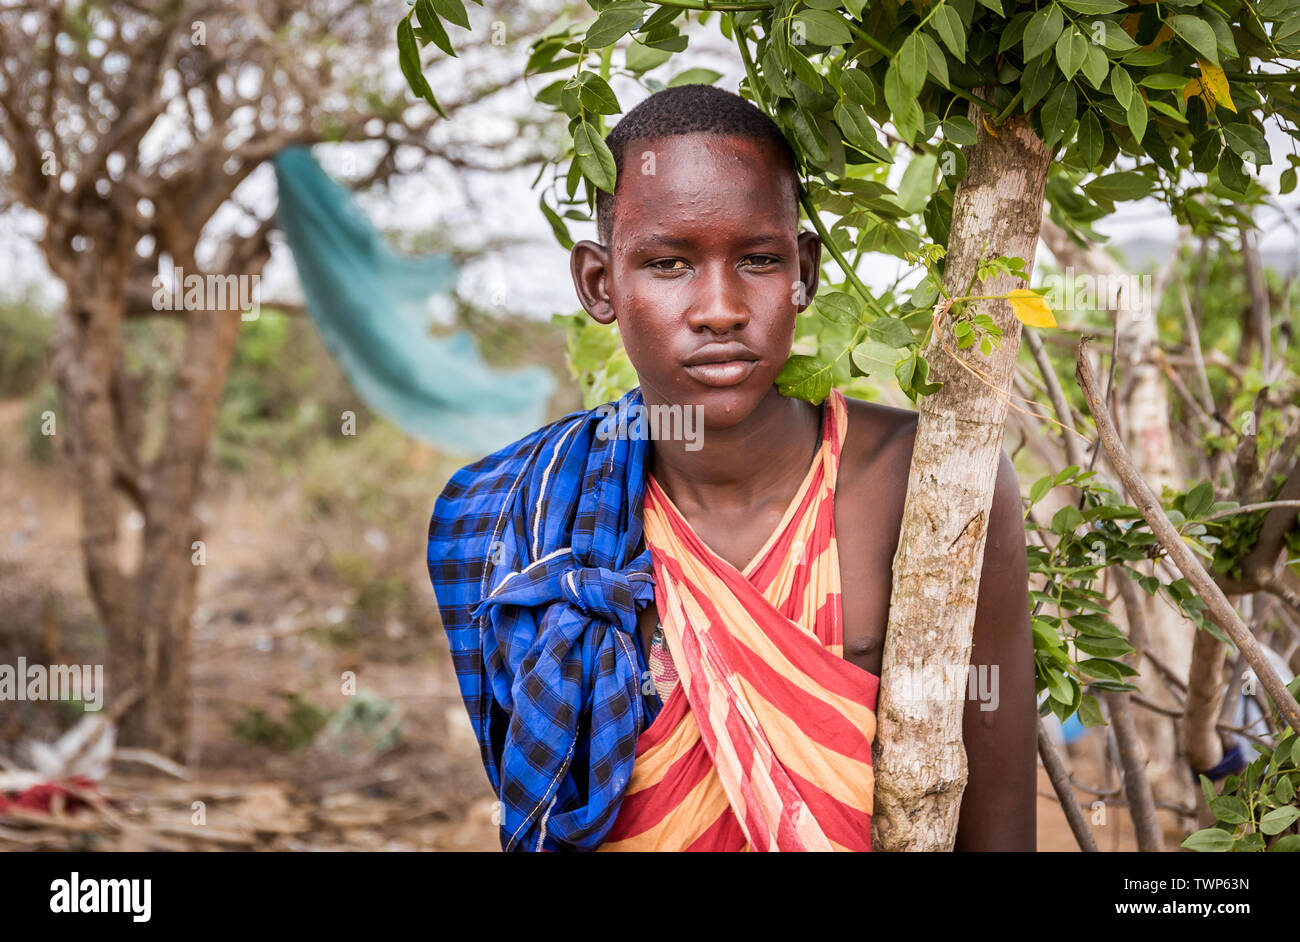 VILLAGE MASAI, KENYA - 11 octobre 2018 : Unindentified african boy portant des vêtements traditionnels en tribu Masai, Kenya Banque D'Images